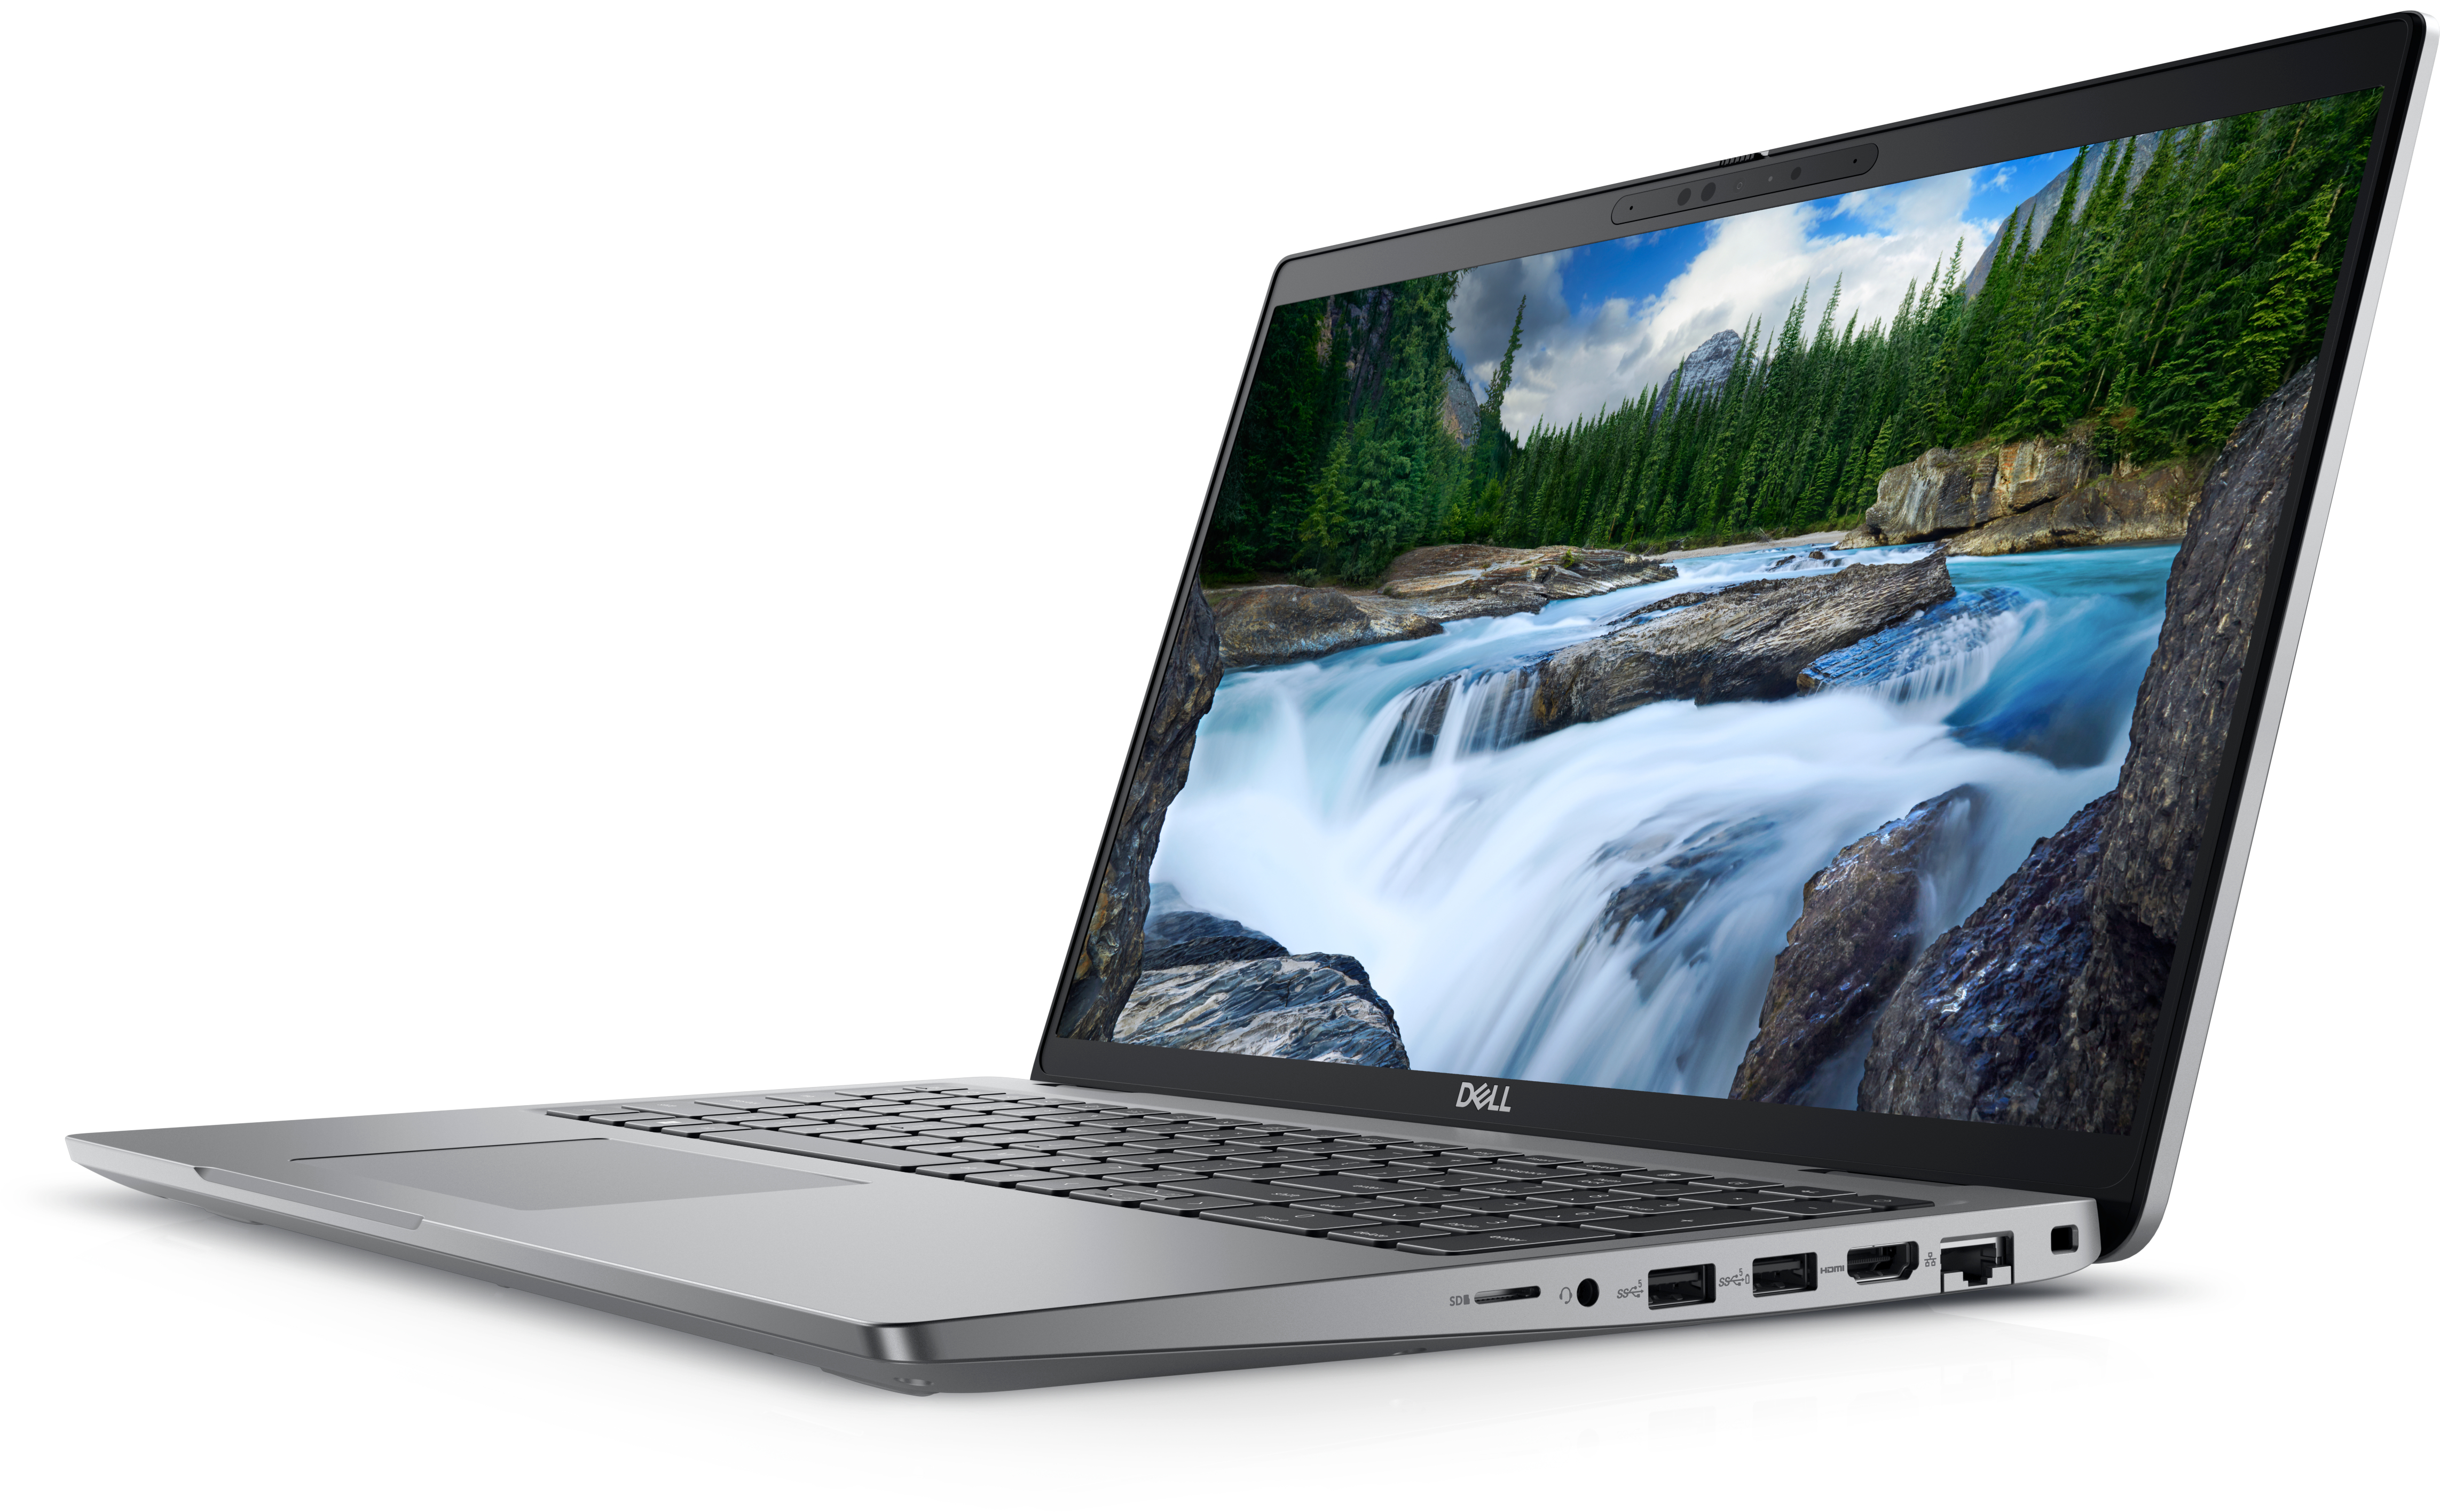 Dell Latitude 5540 Business Laptop - W/ 13th Gen Intel Core - 15.6 FHD Screen - 8GB - 256G